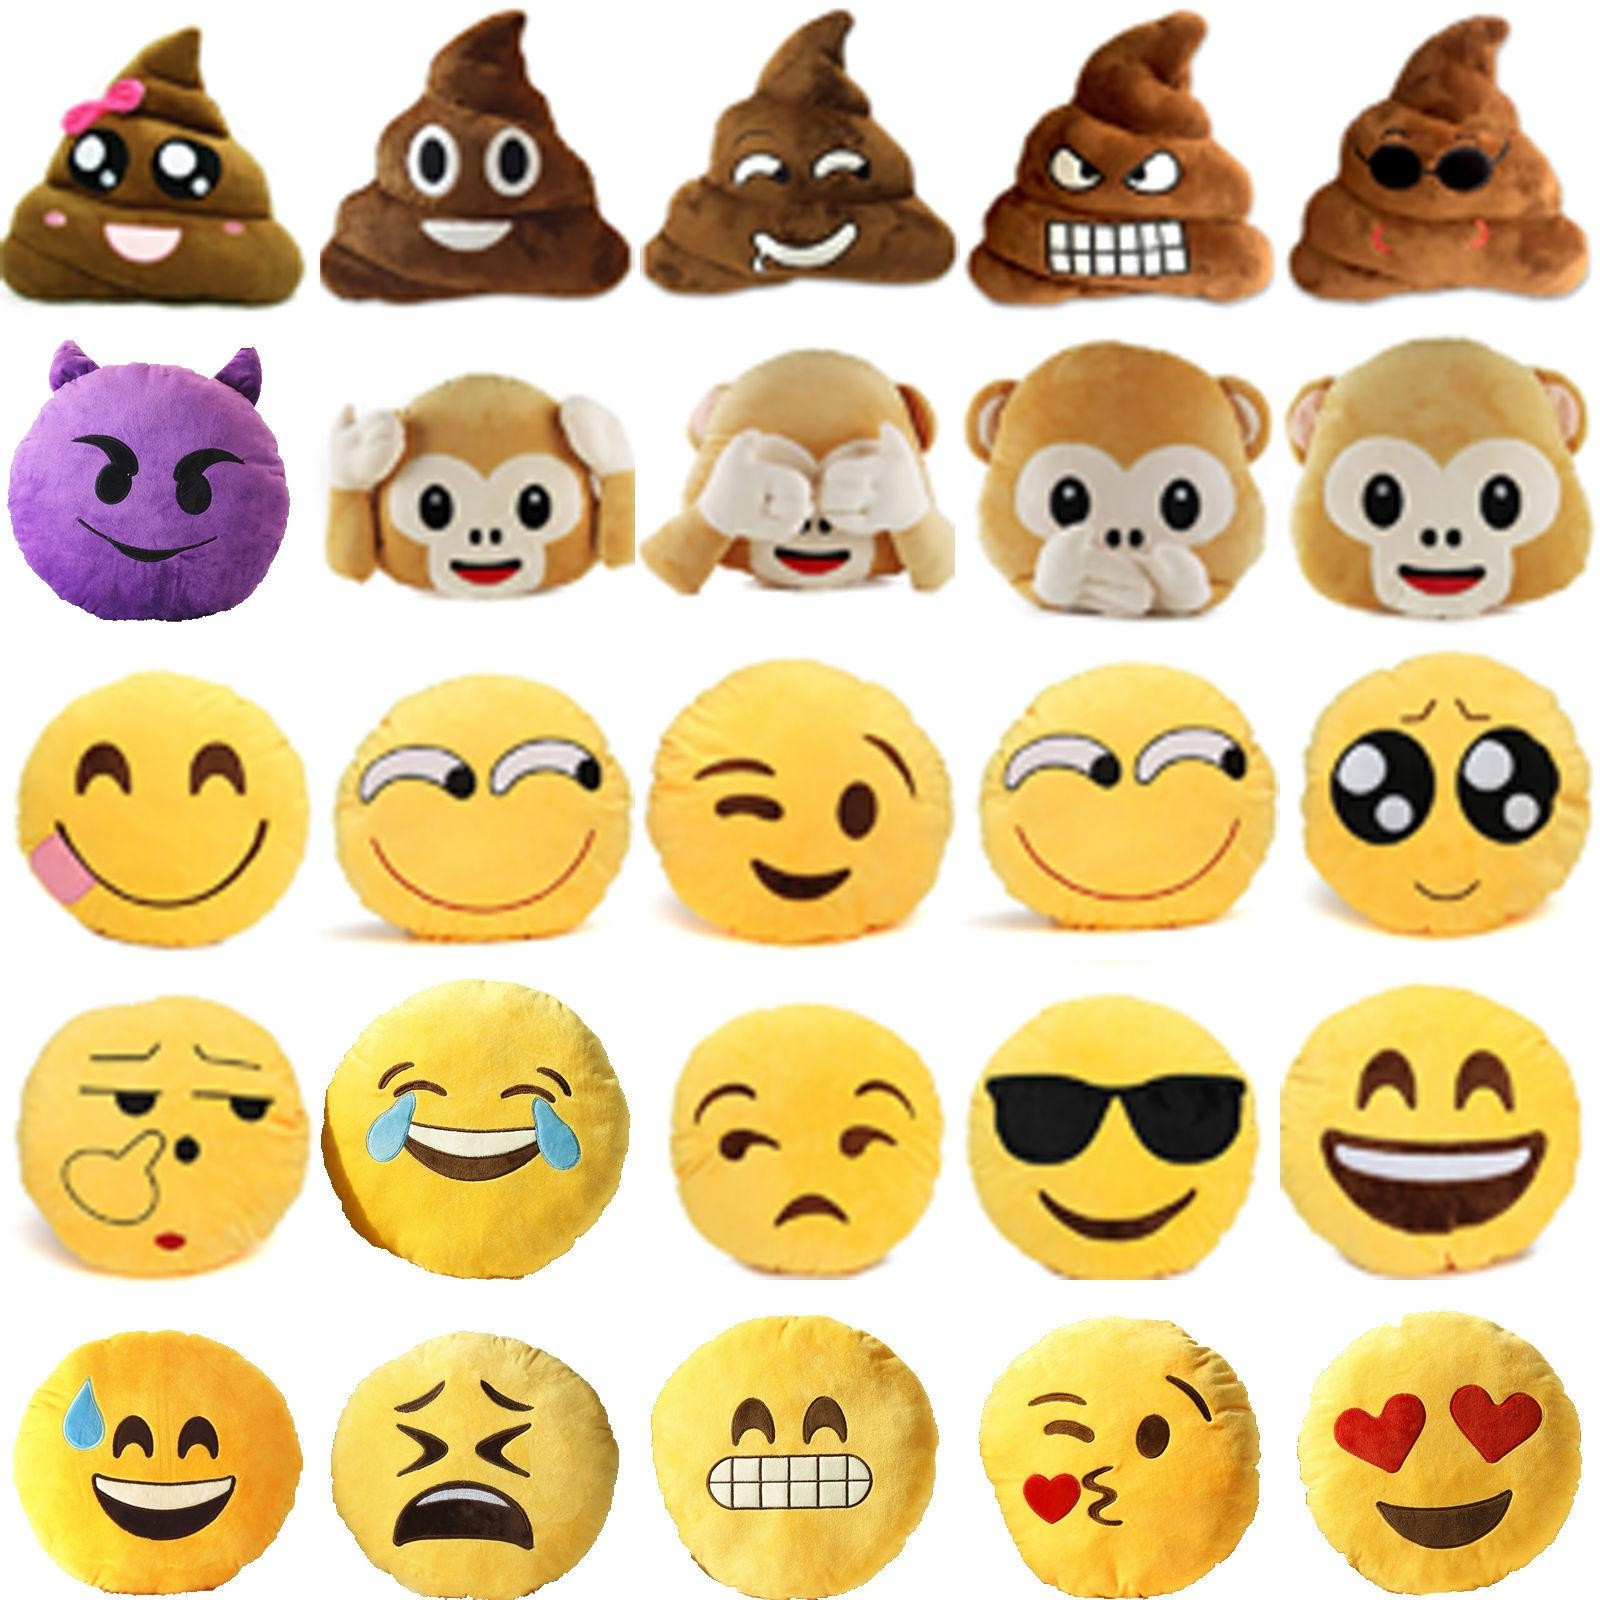 Dessin Caca Emoji Beau Photographie Caca Emoji En Pixel Art